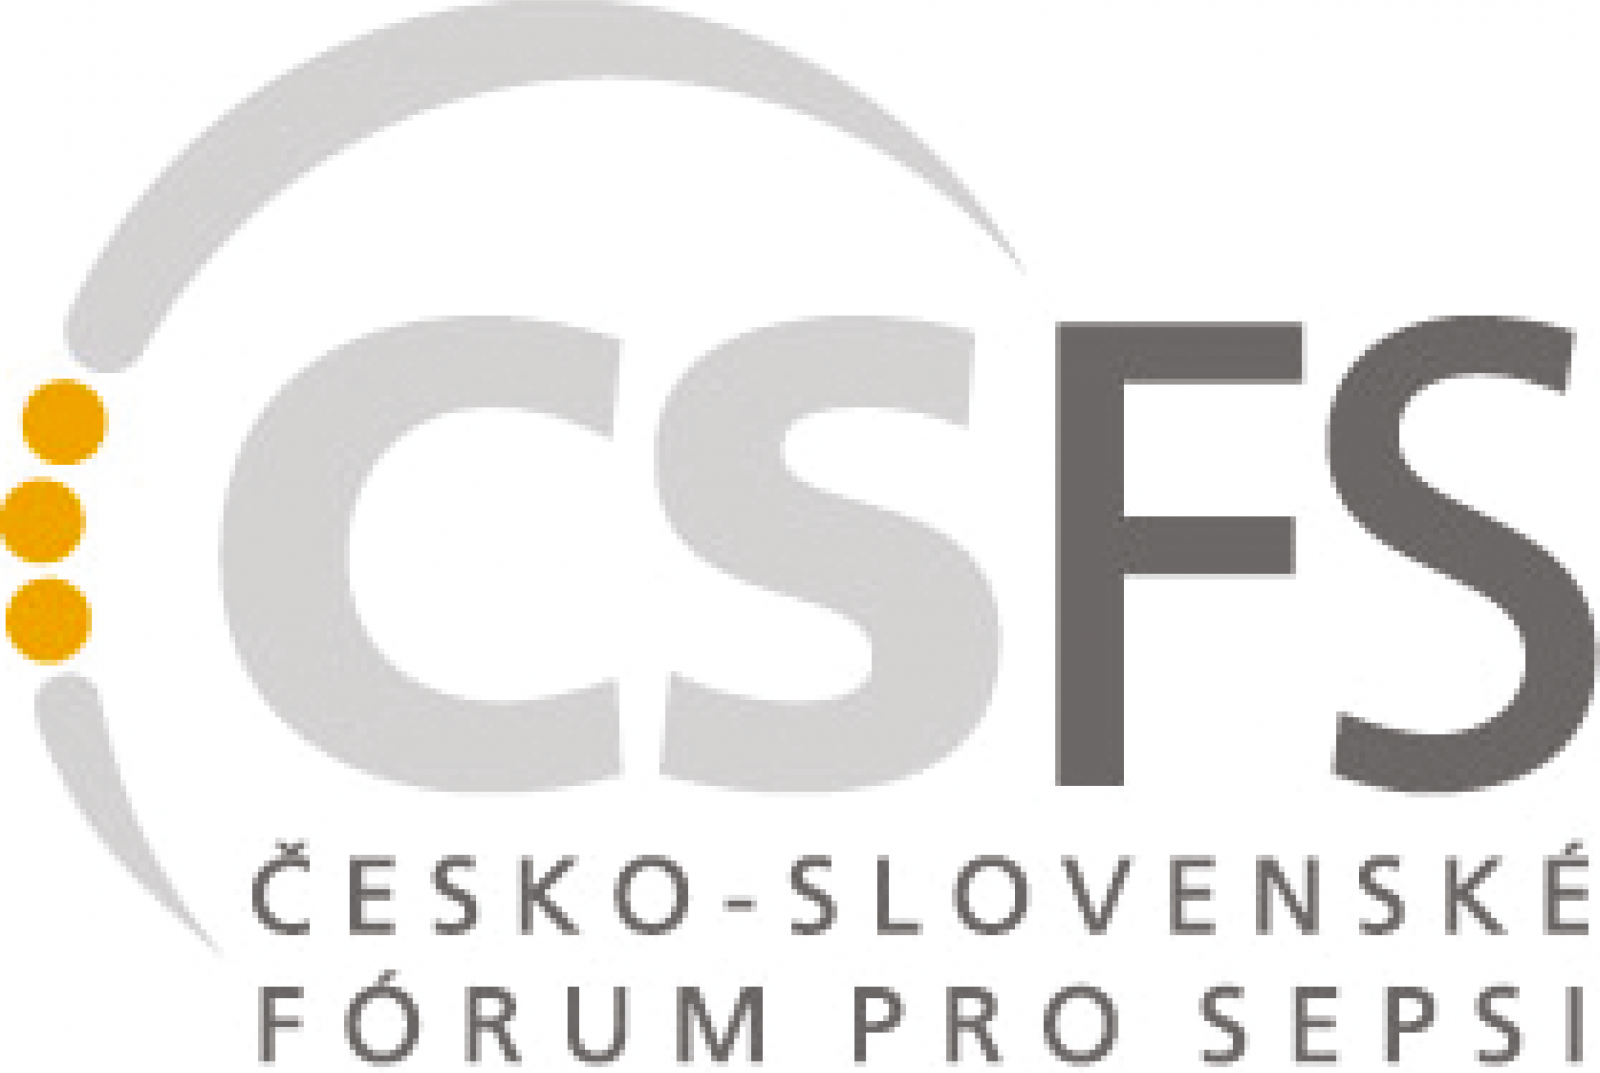 Czech and Slovak Forum for Sepsis (CSFS)